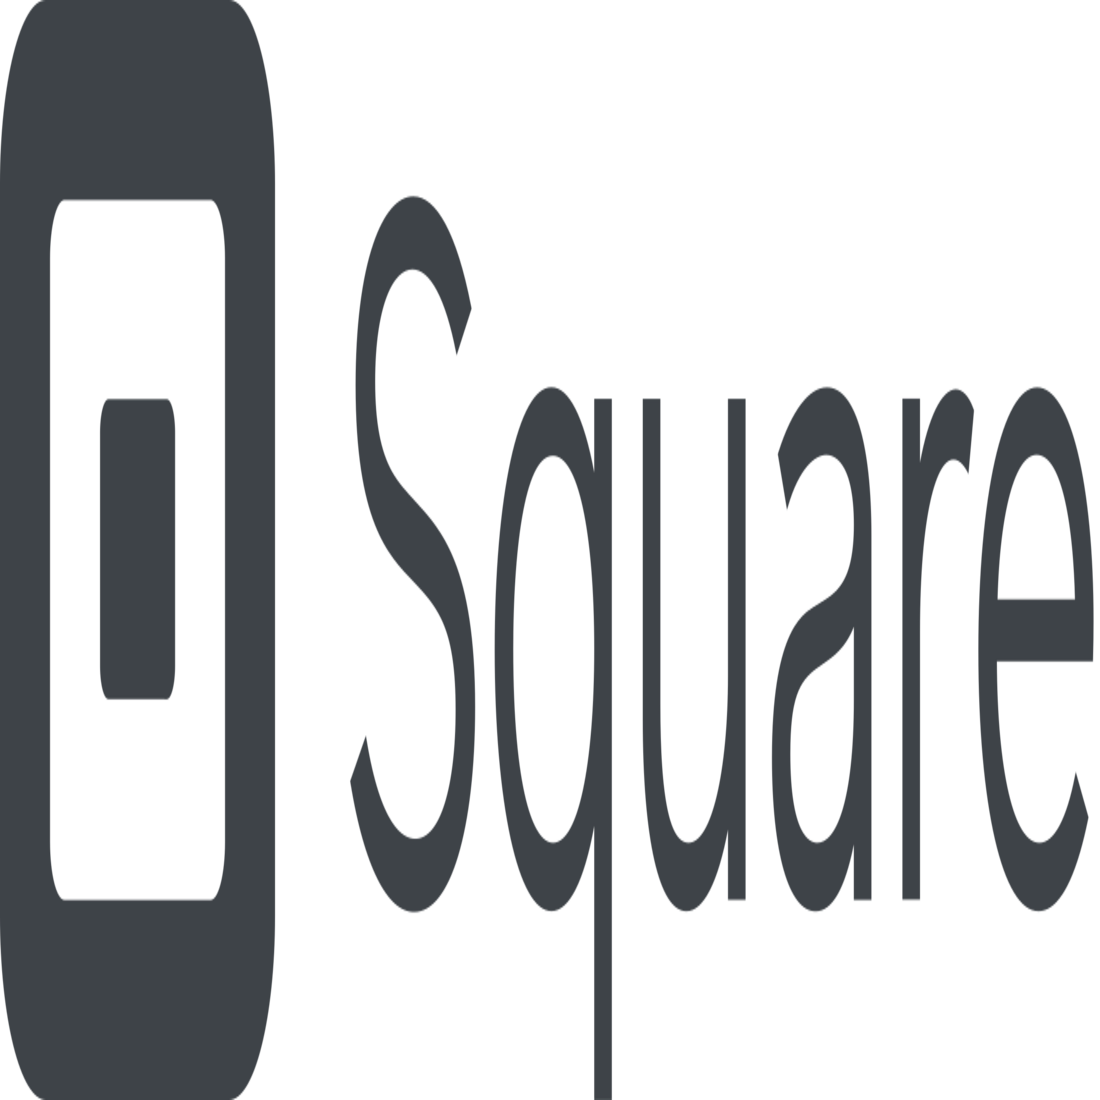 Square payment portal logo